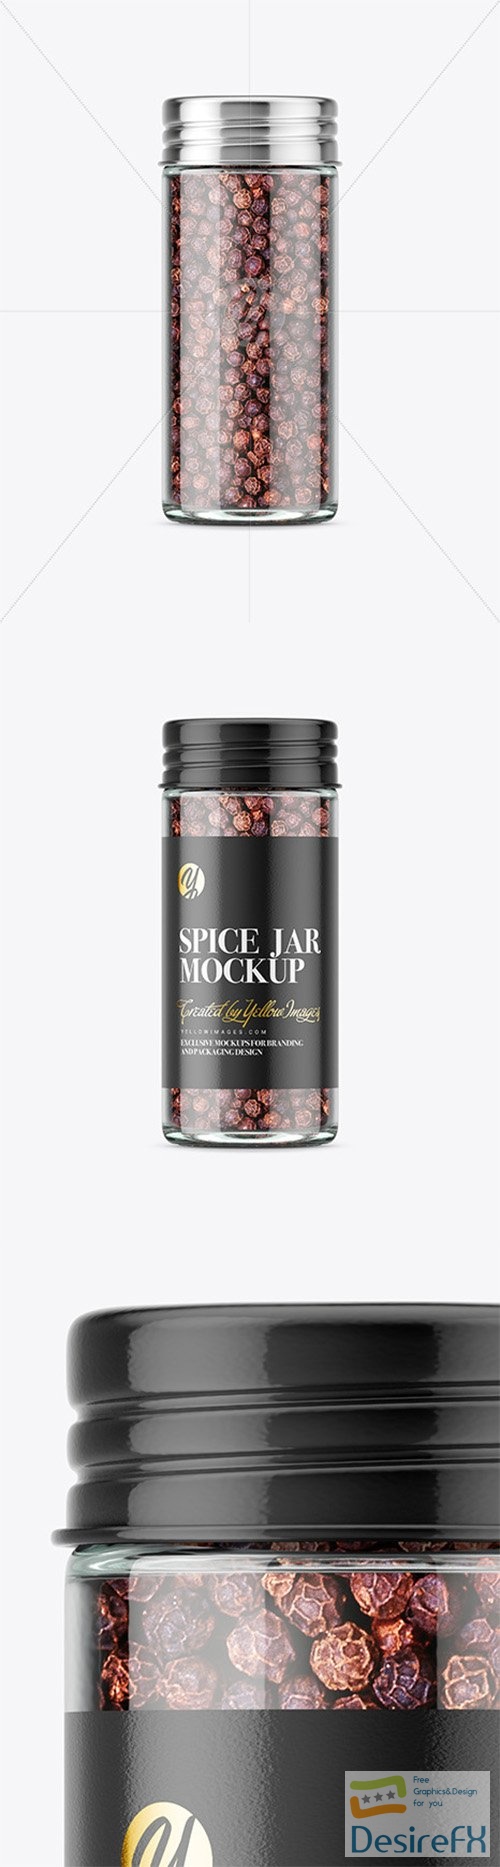 Spice Jar with Black Pepper Mockup 80580 TIF